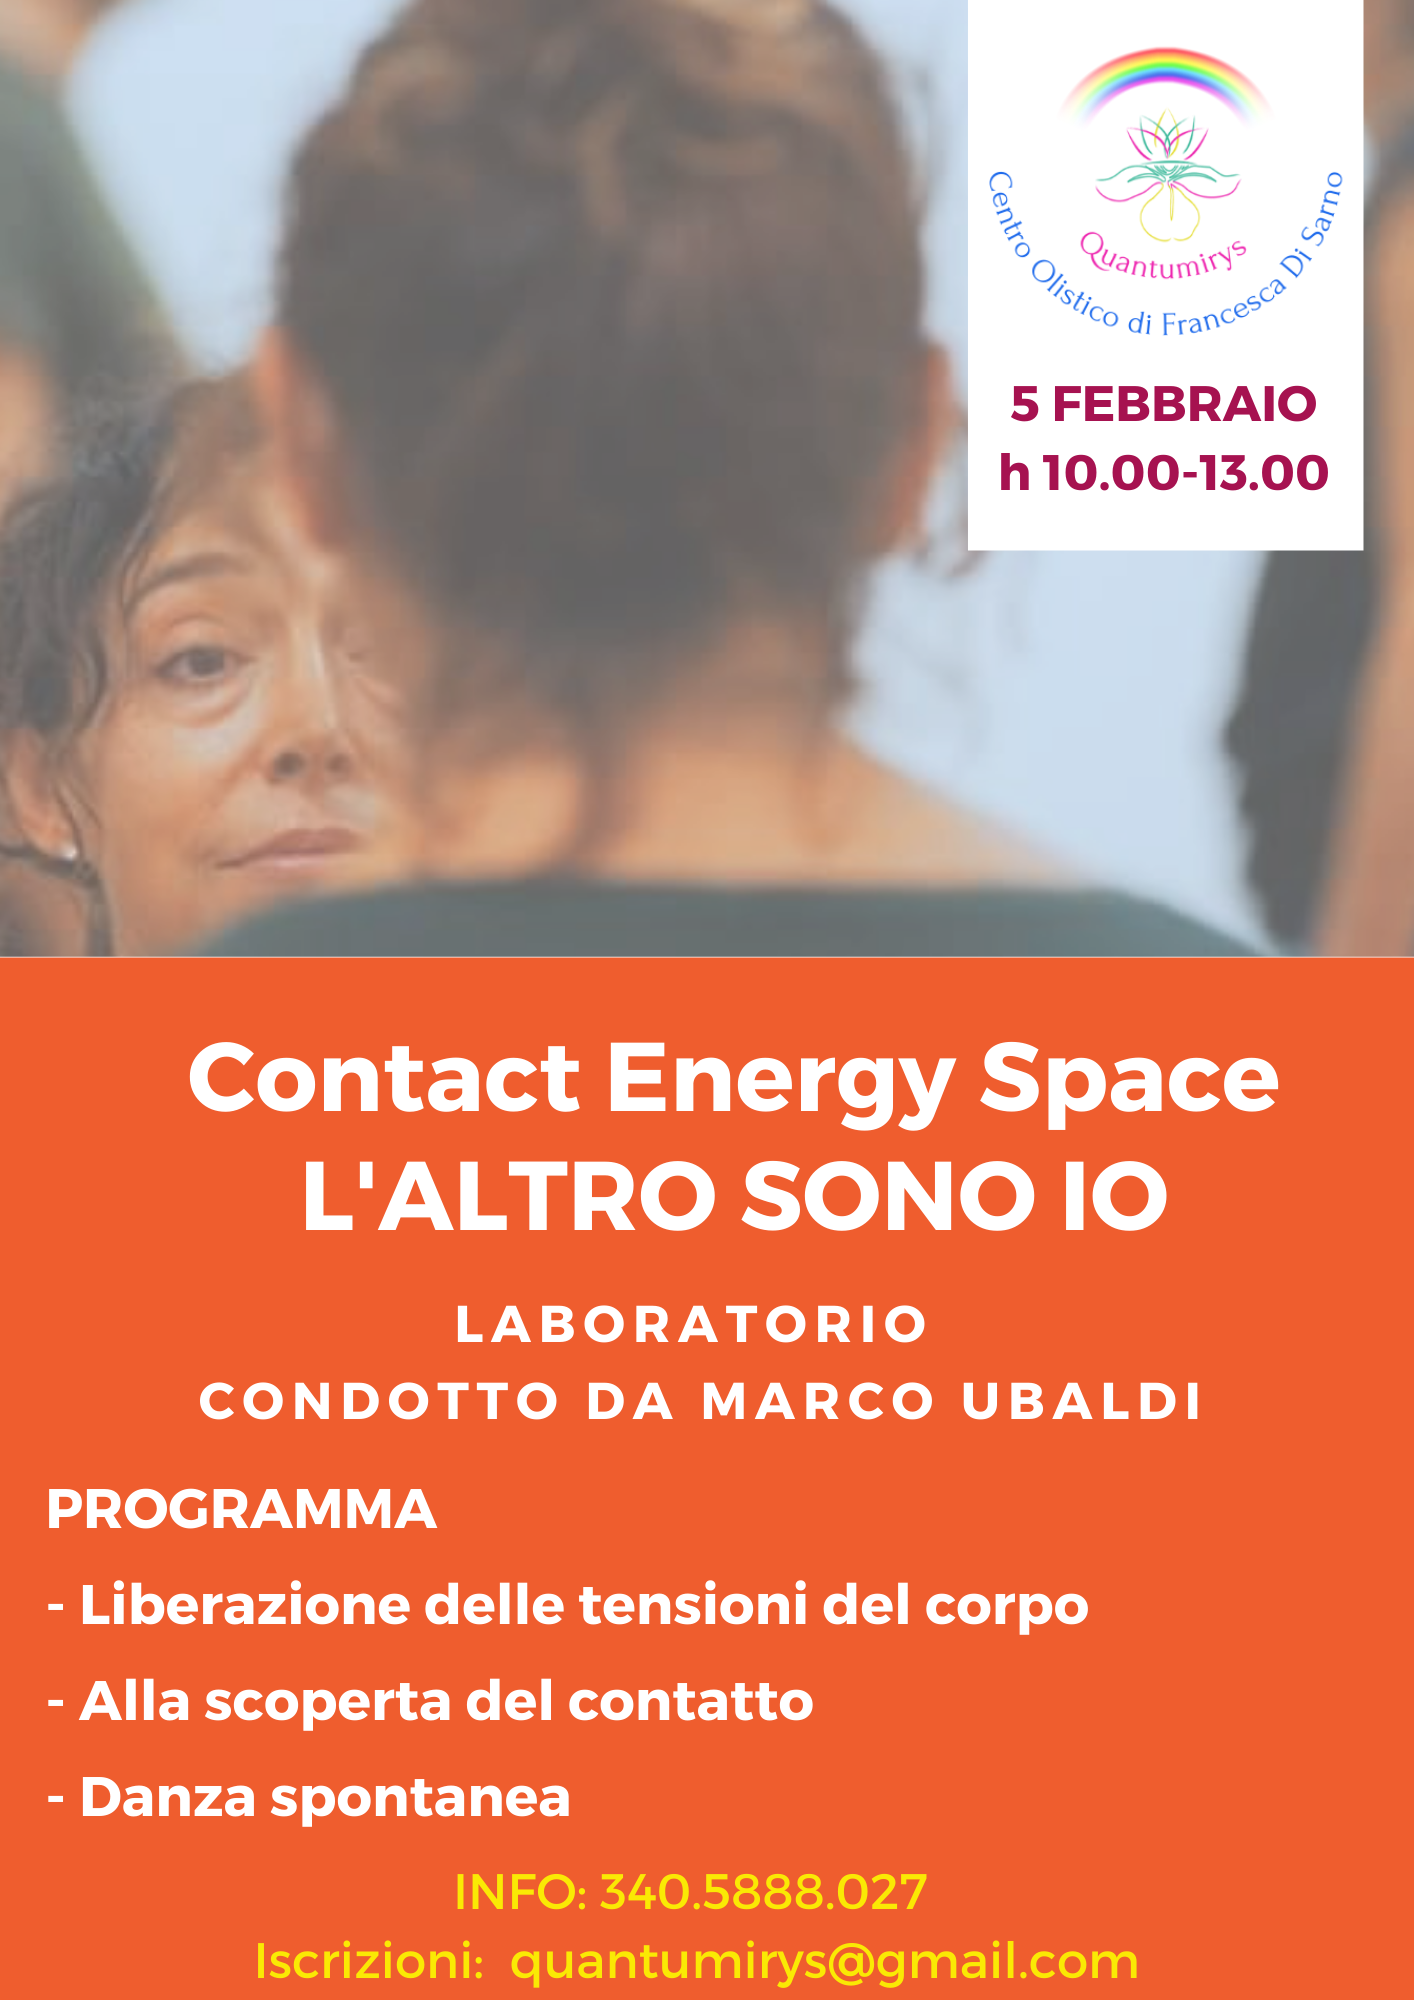 Contact Energy Space - L'ALTRO SONO IO.